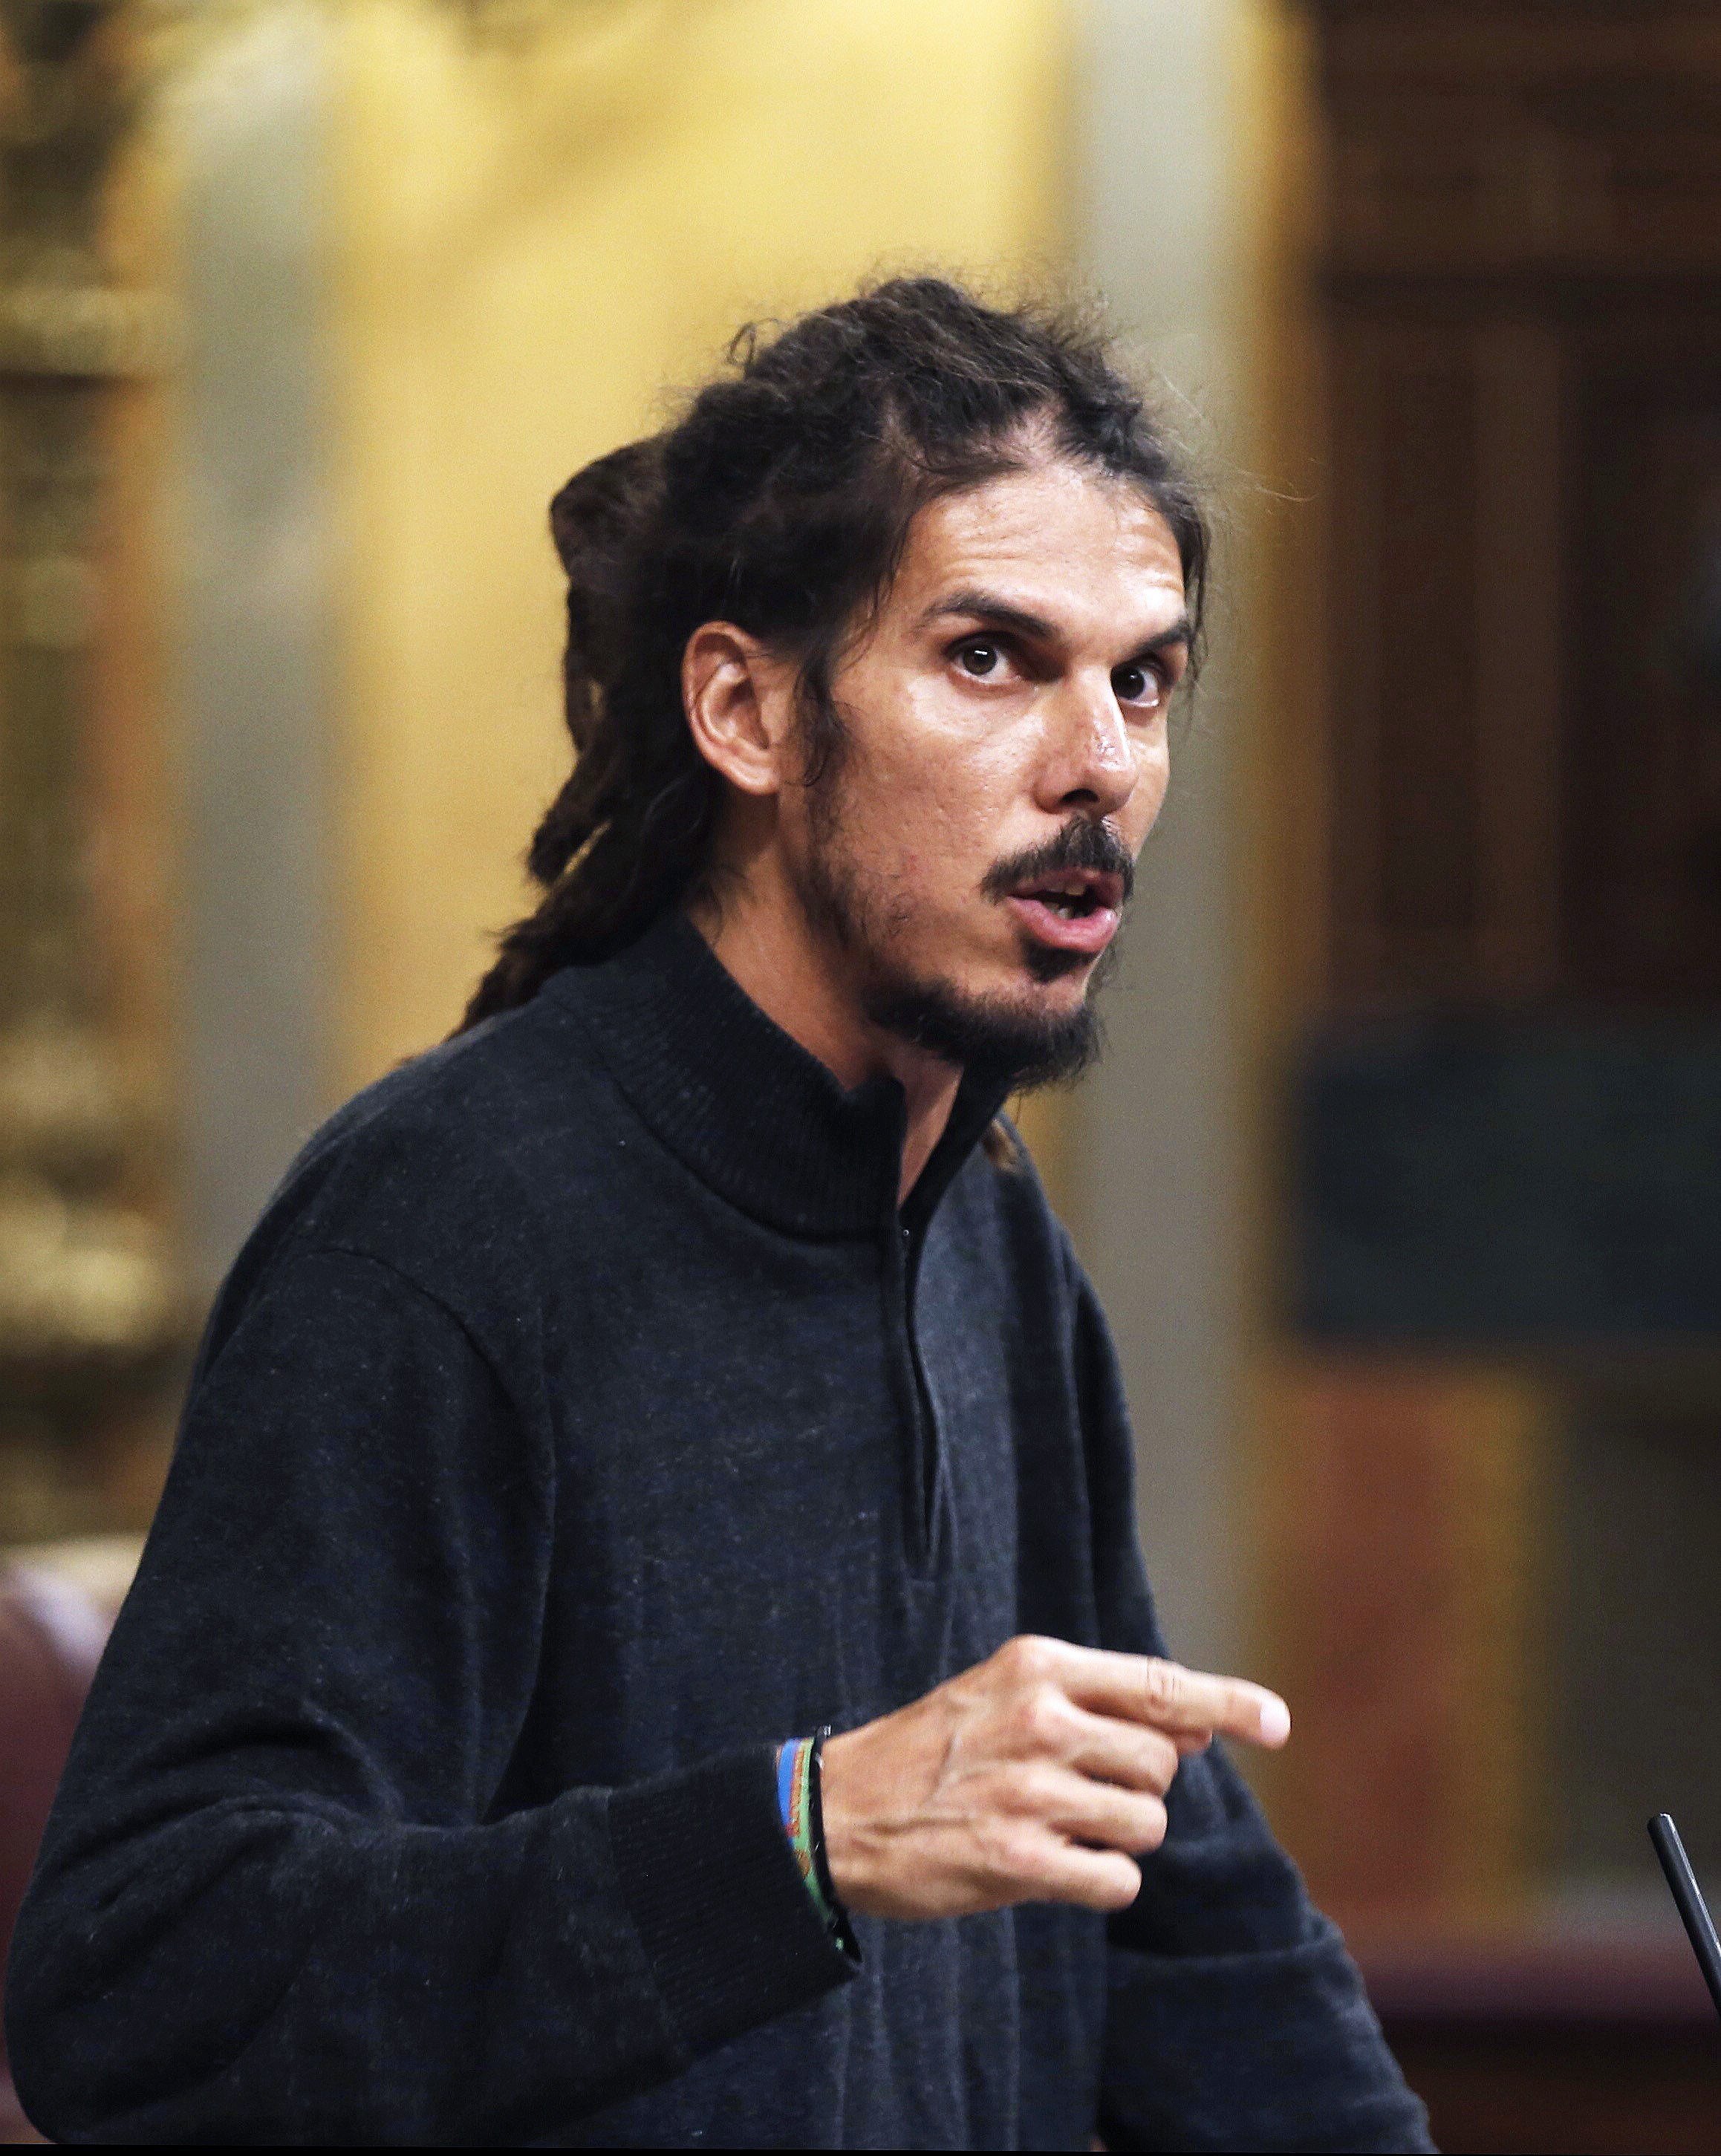 Rufián clama pels malnoms selectius dels polítics: De "El Rastas" a "El Robos"